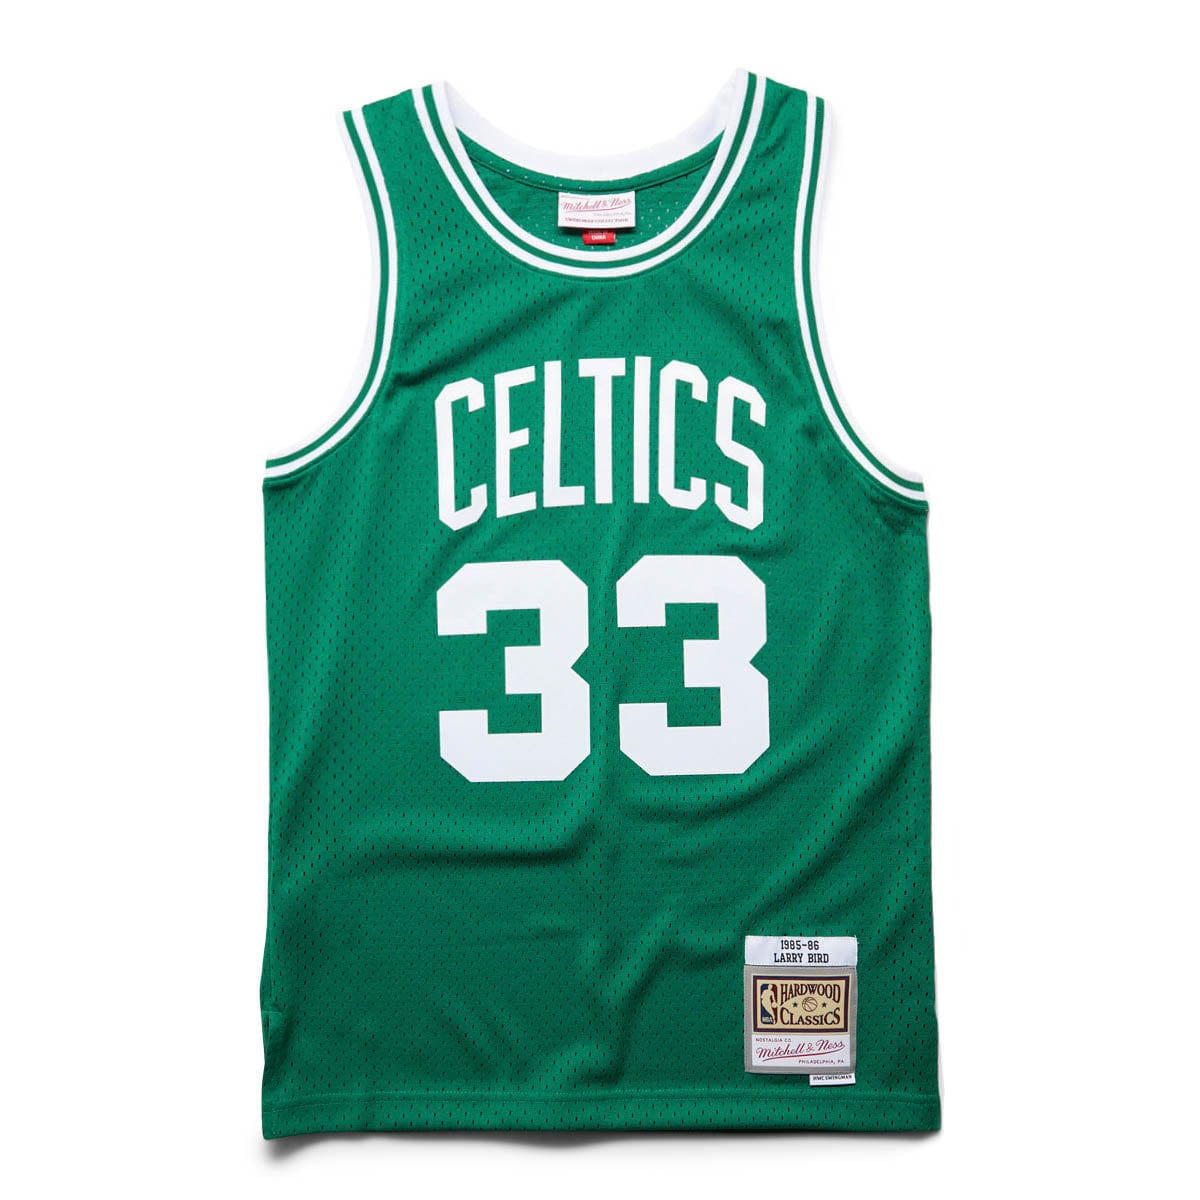  Mitchell & Ness NBA Swingman Road Jersey Celtics 85 Larry Bird  Kelly Green SM : Sports & Outdoors